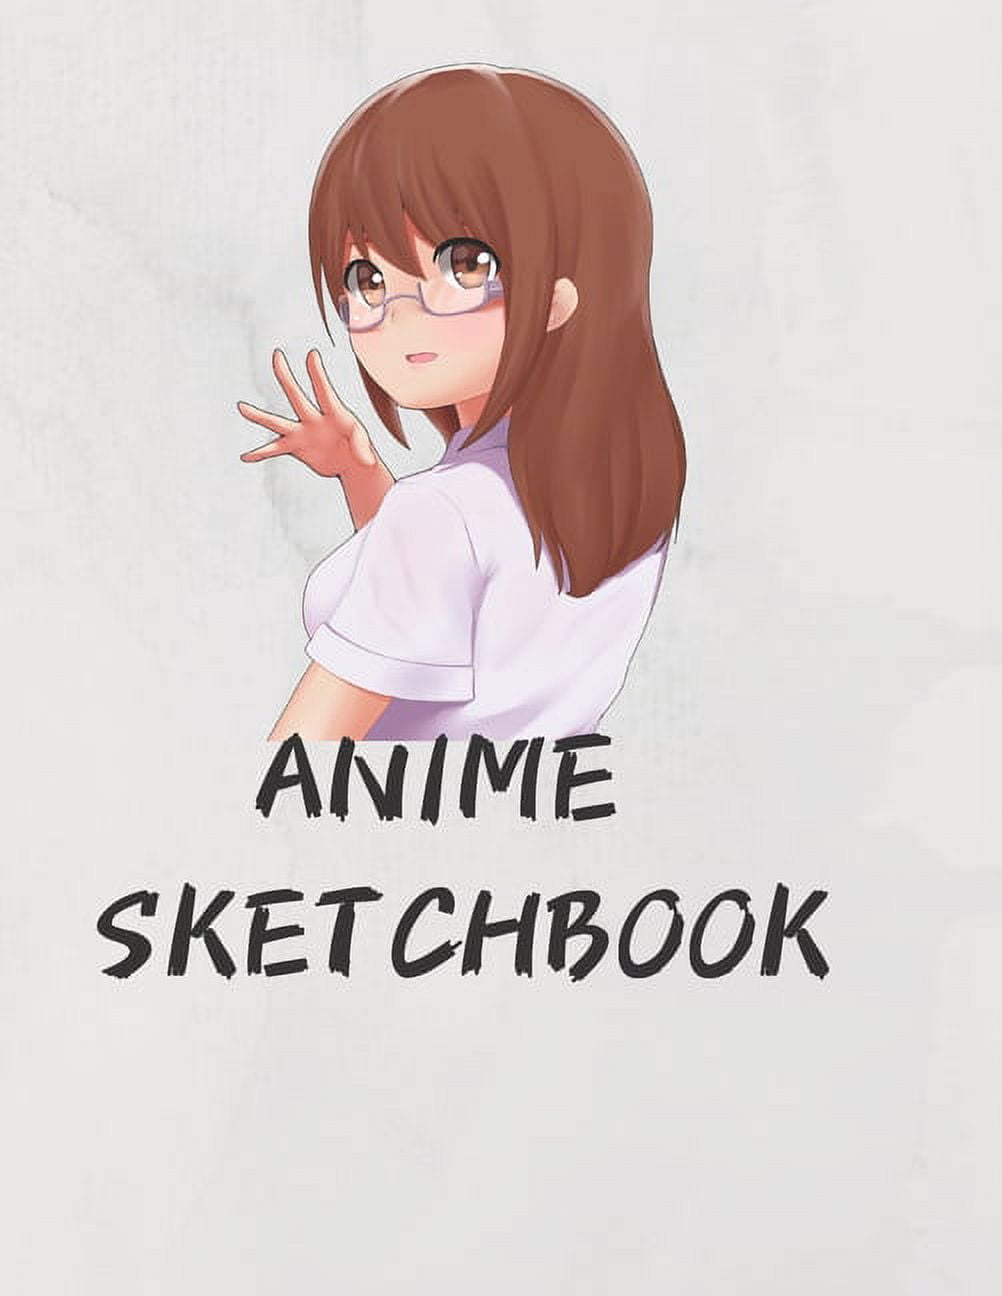  Sketchbook: anime manga cute sketch book